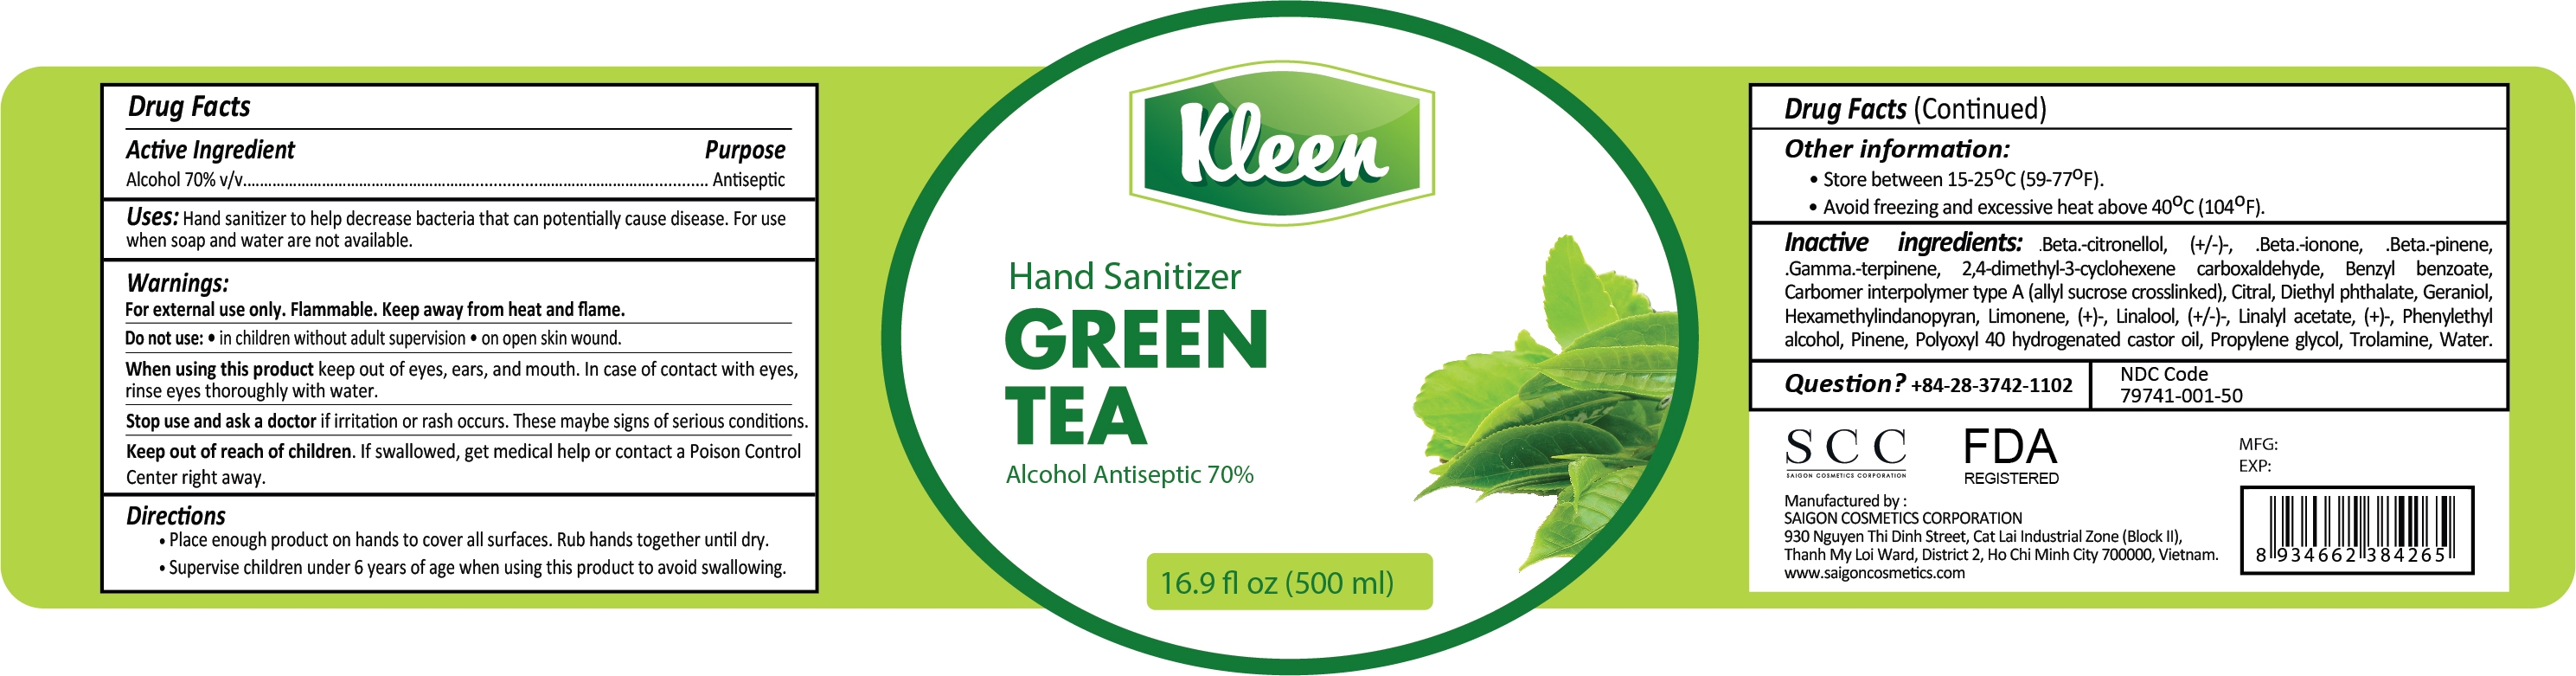 Kleen Hand Sanitizer Green Tea 500ml Label